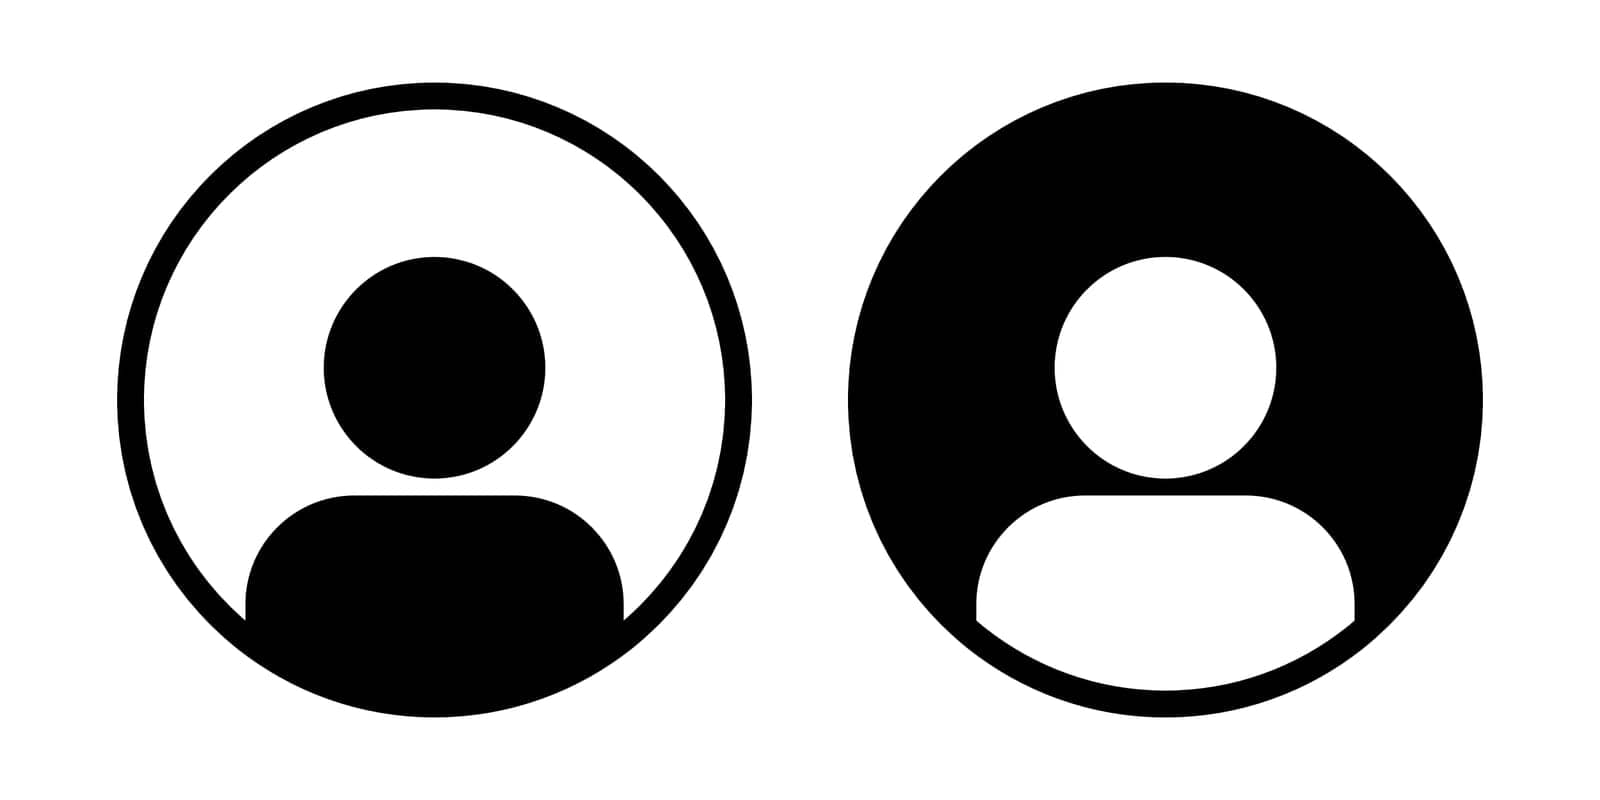 User icon symbol simple design